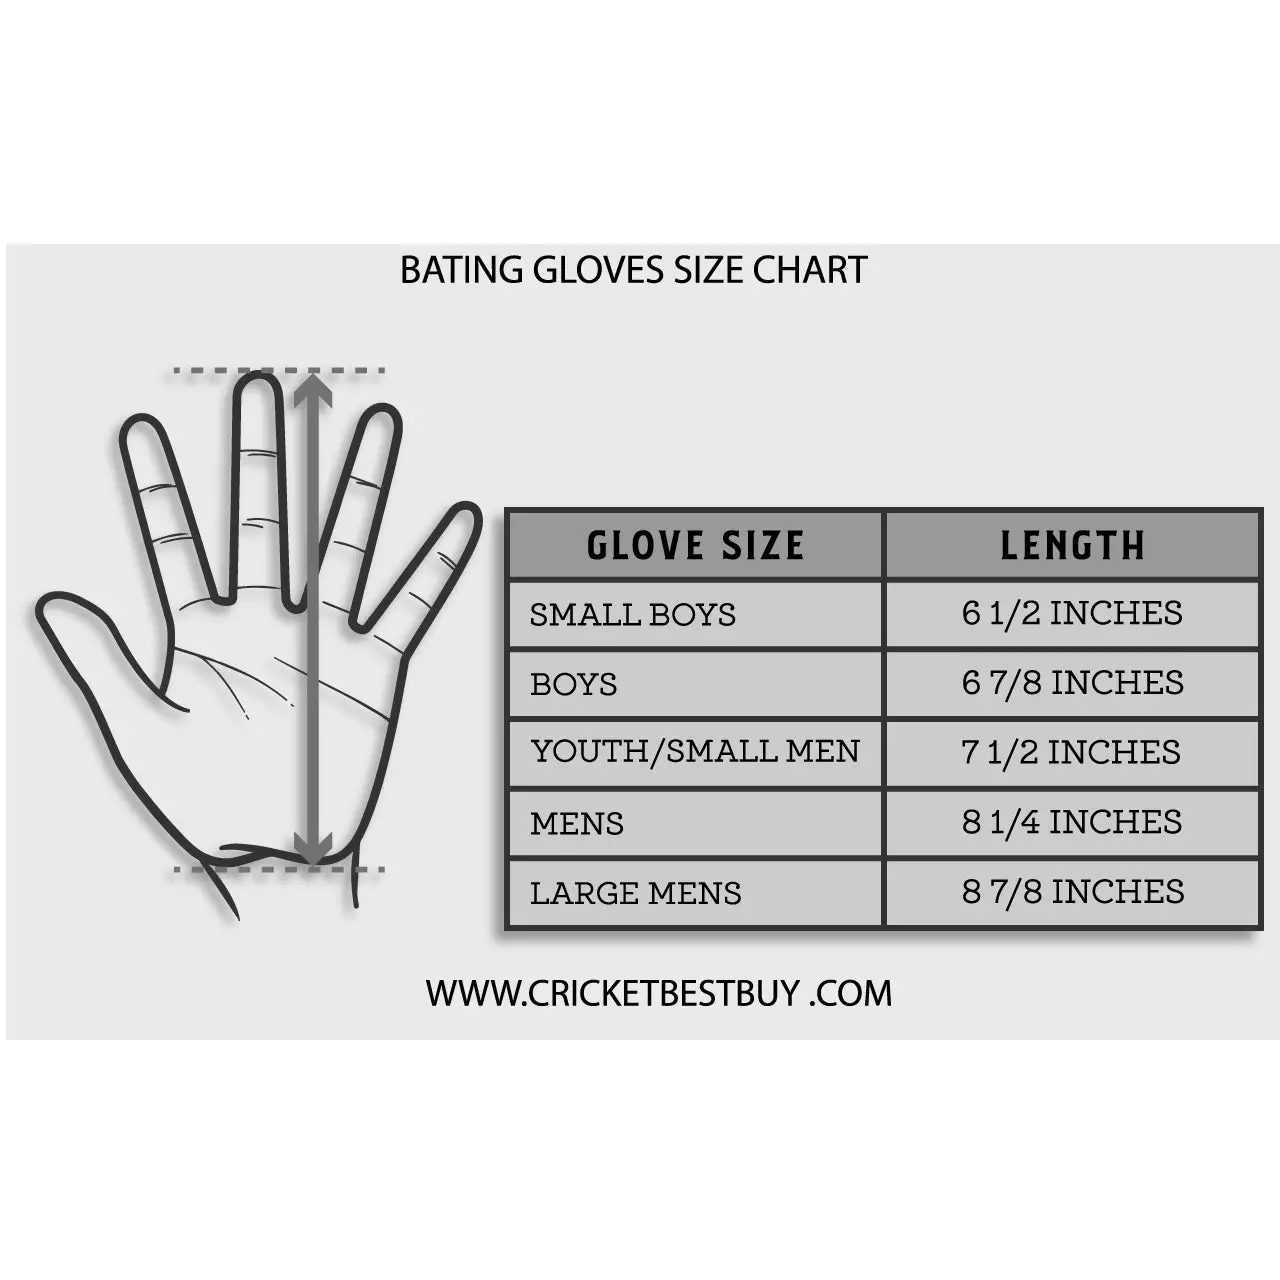 SG RSD Xtreme Cricket Batting Gloves - GLOVE - BATTING